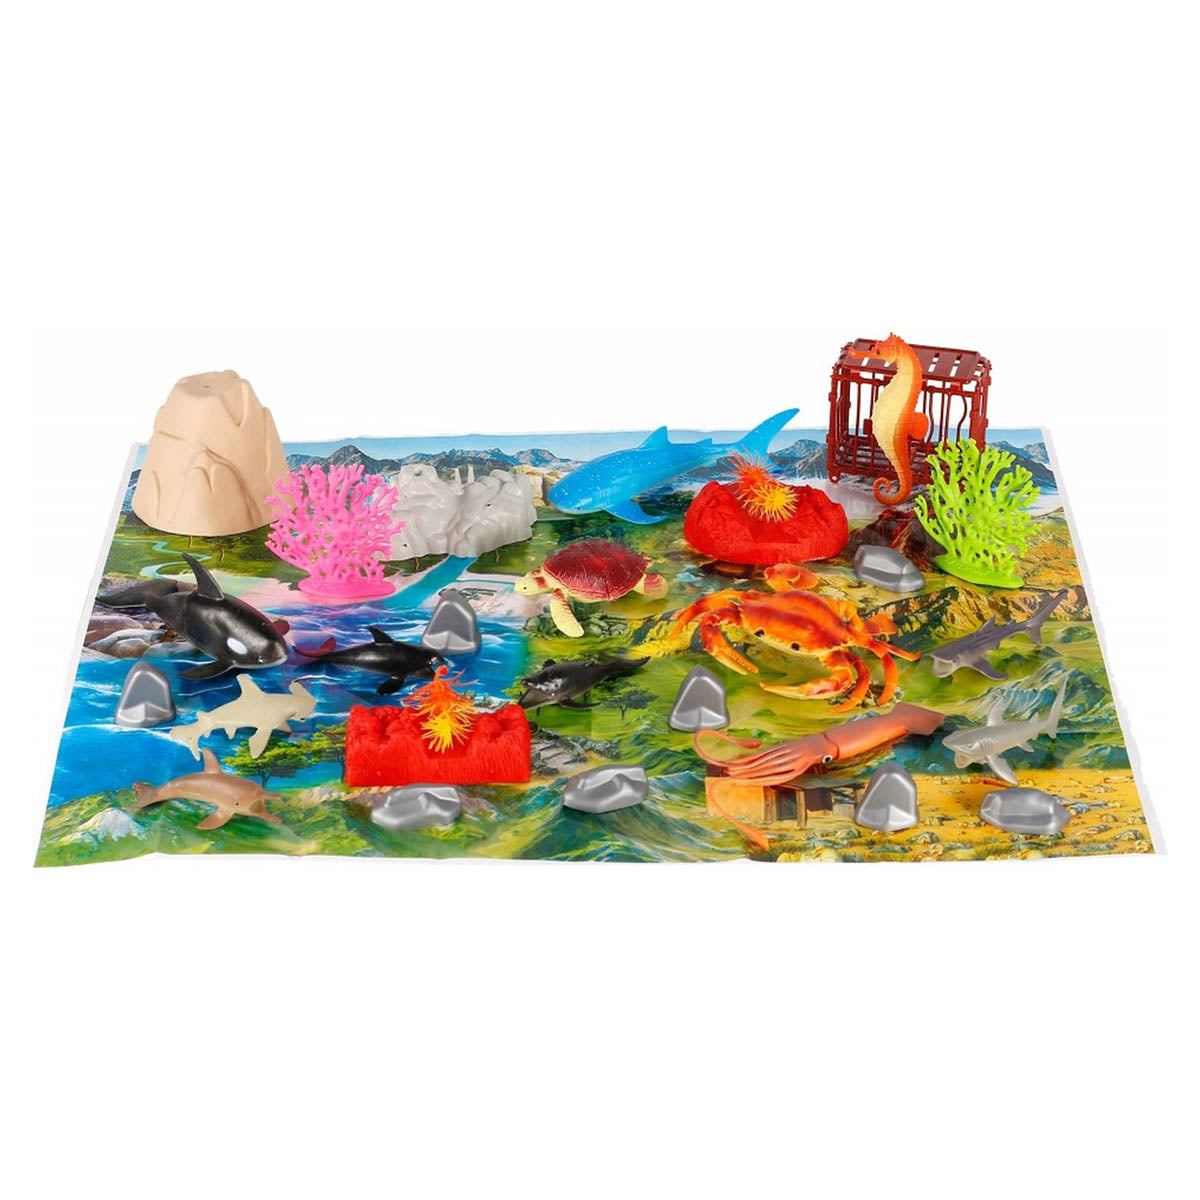 <tc>Ariko</tc> Sea Creatures Play Set - Great for Kids - 30 Pieces - Includes play mat